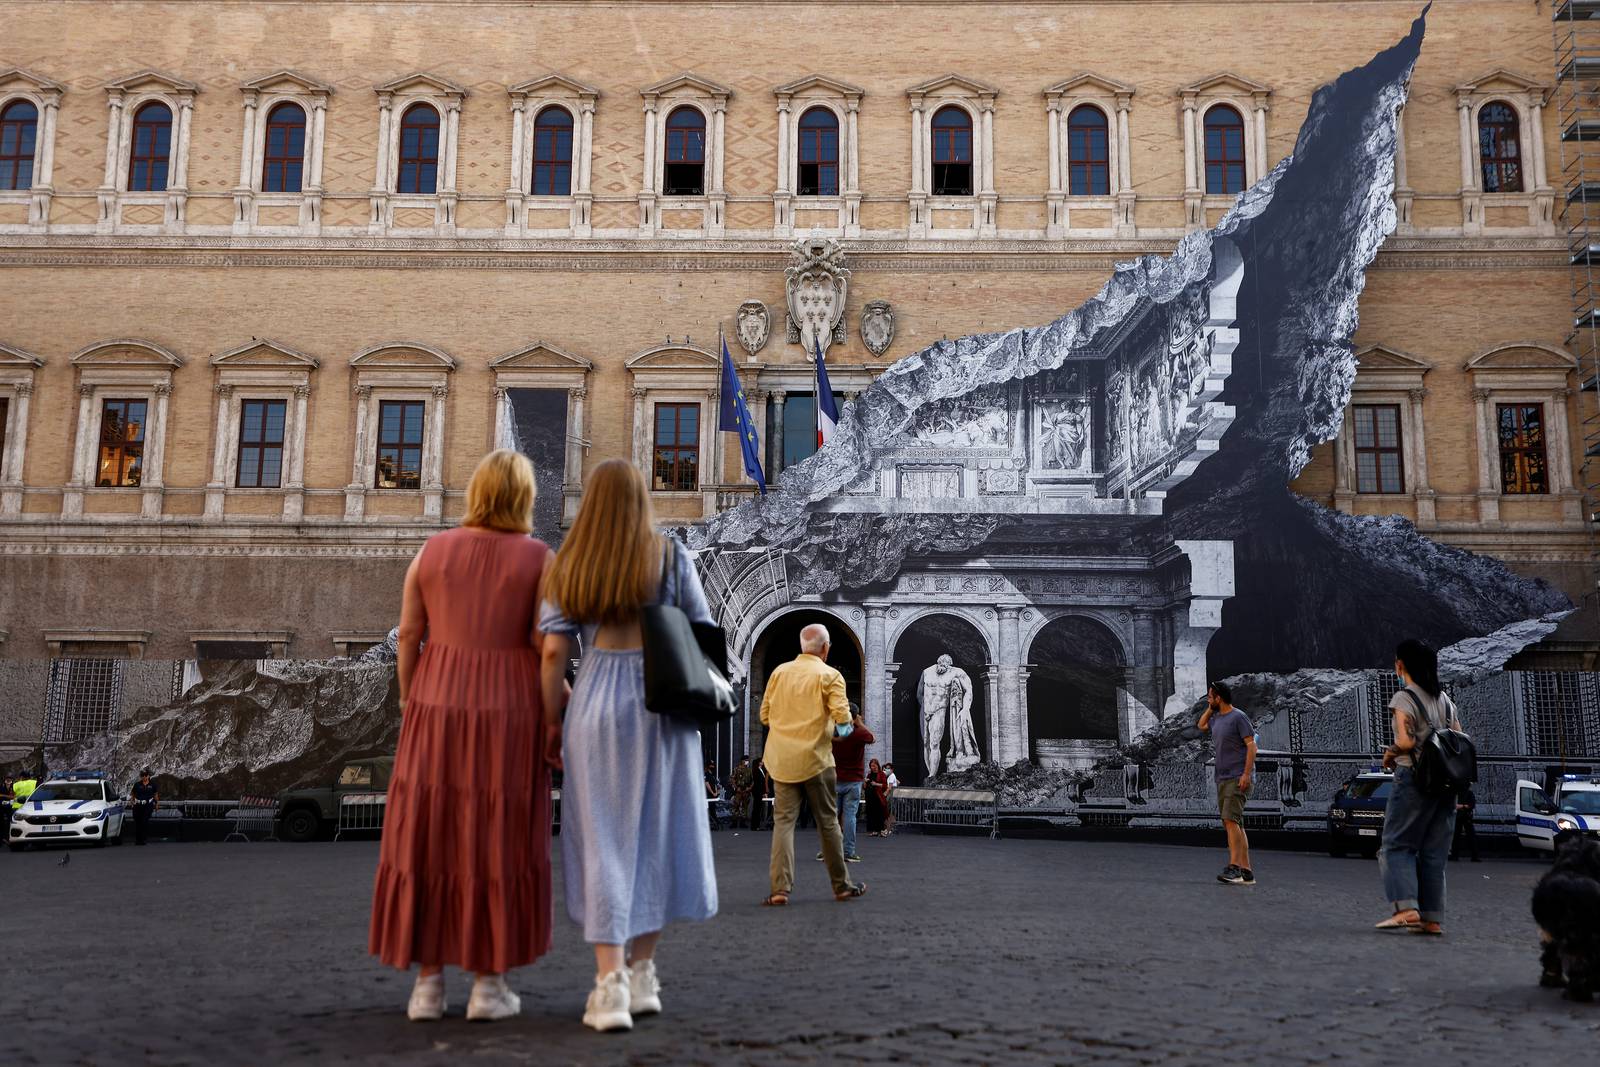 Street artist JR unveils optical illusion artwork in Rome